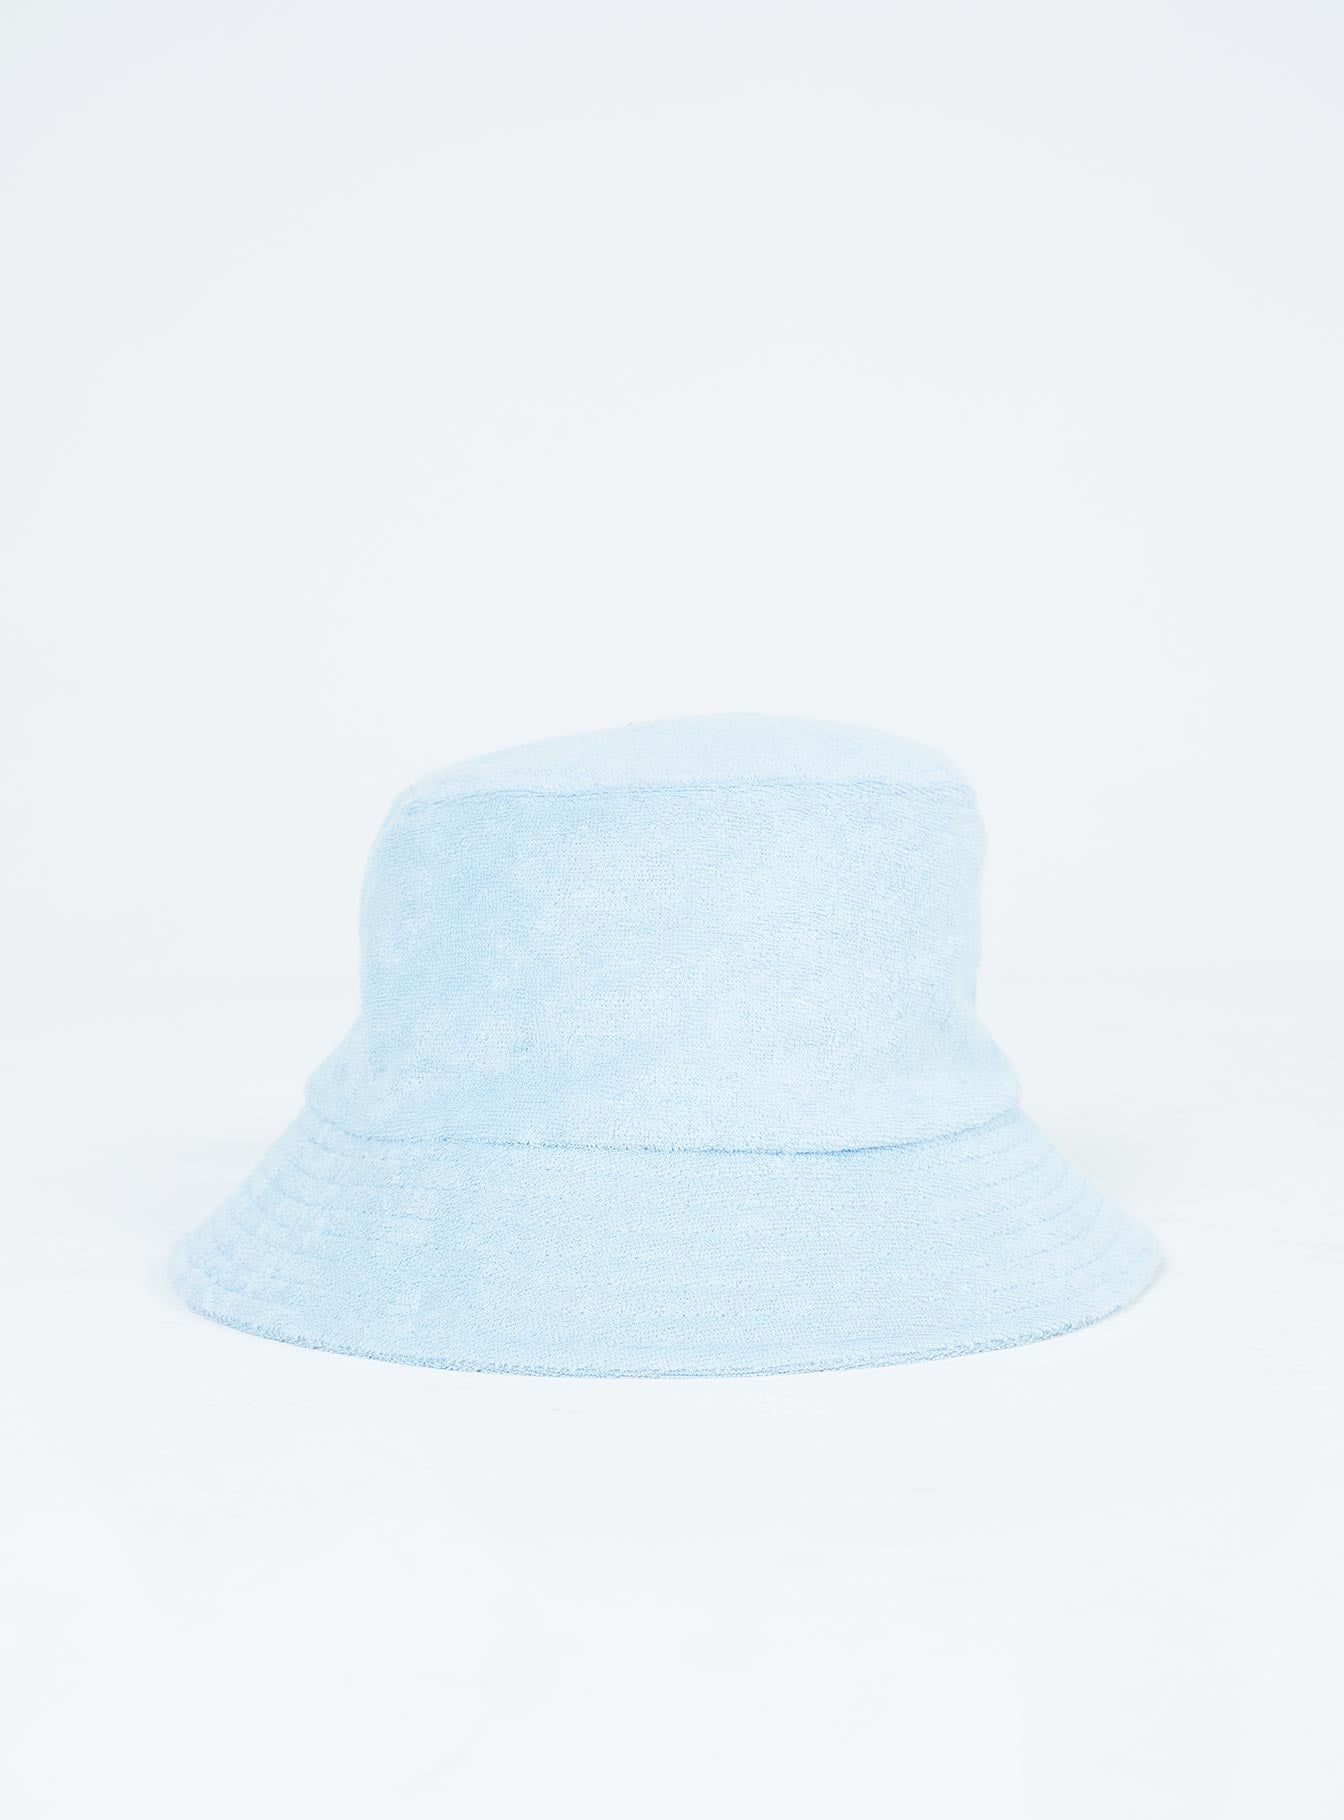 blue baby hat